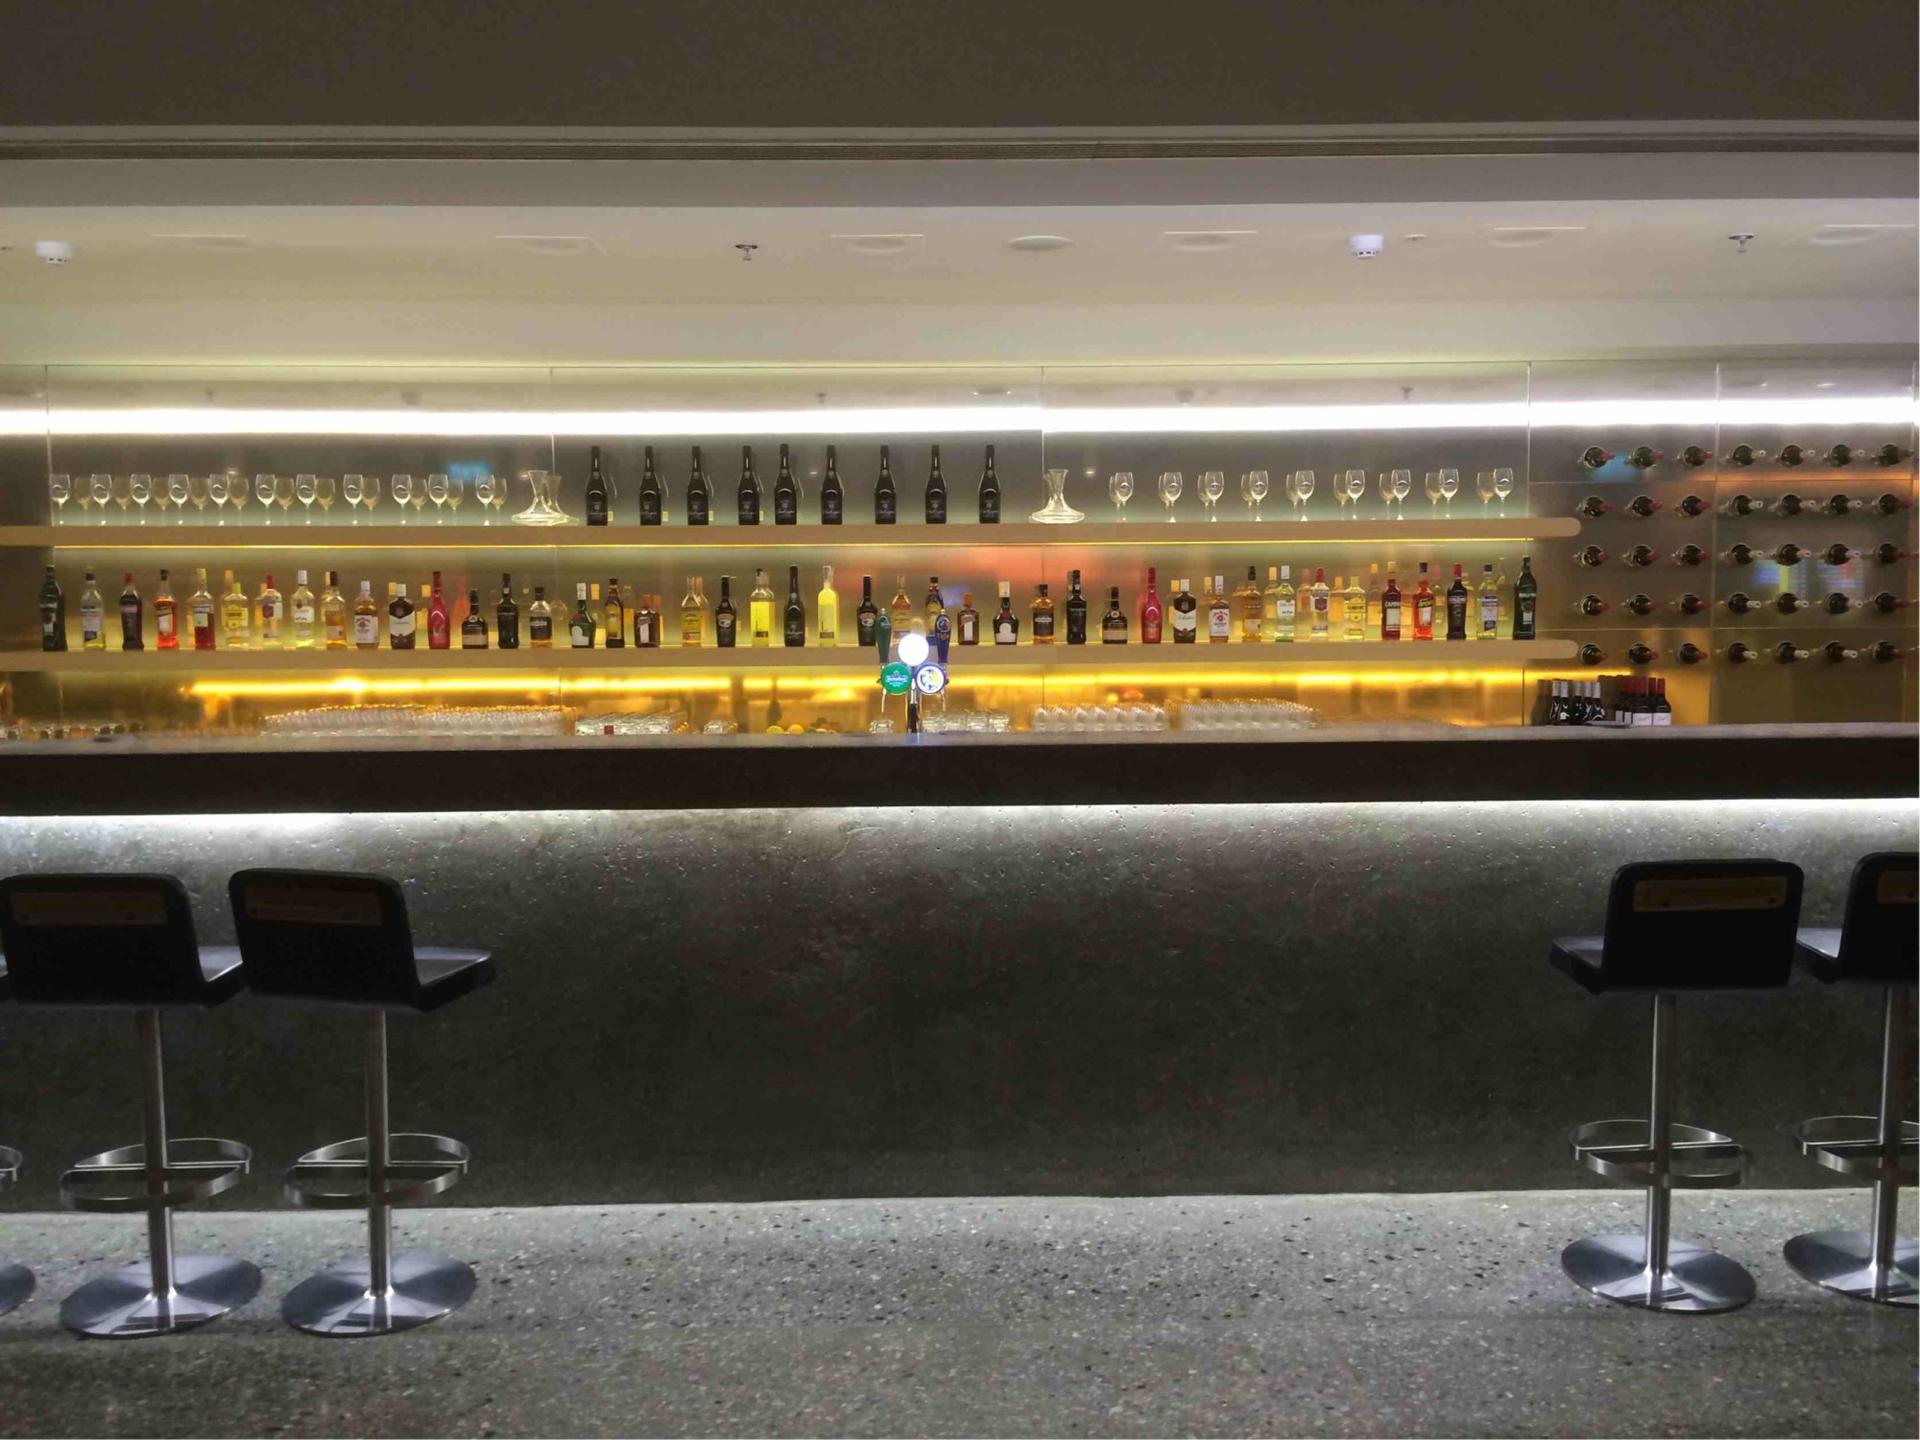 The Qantas Singapore Lounge image 19 of 49